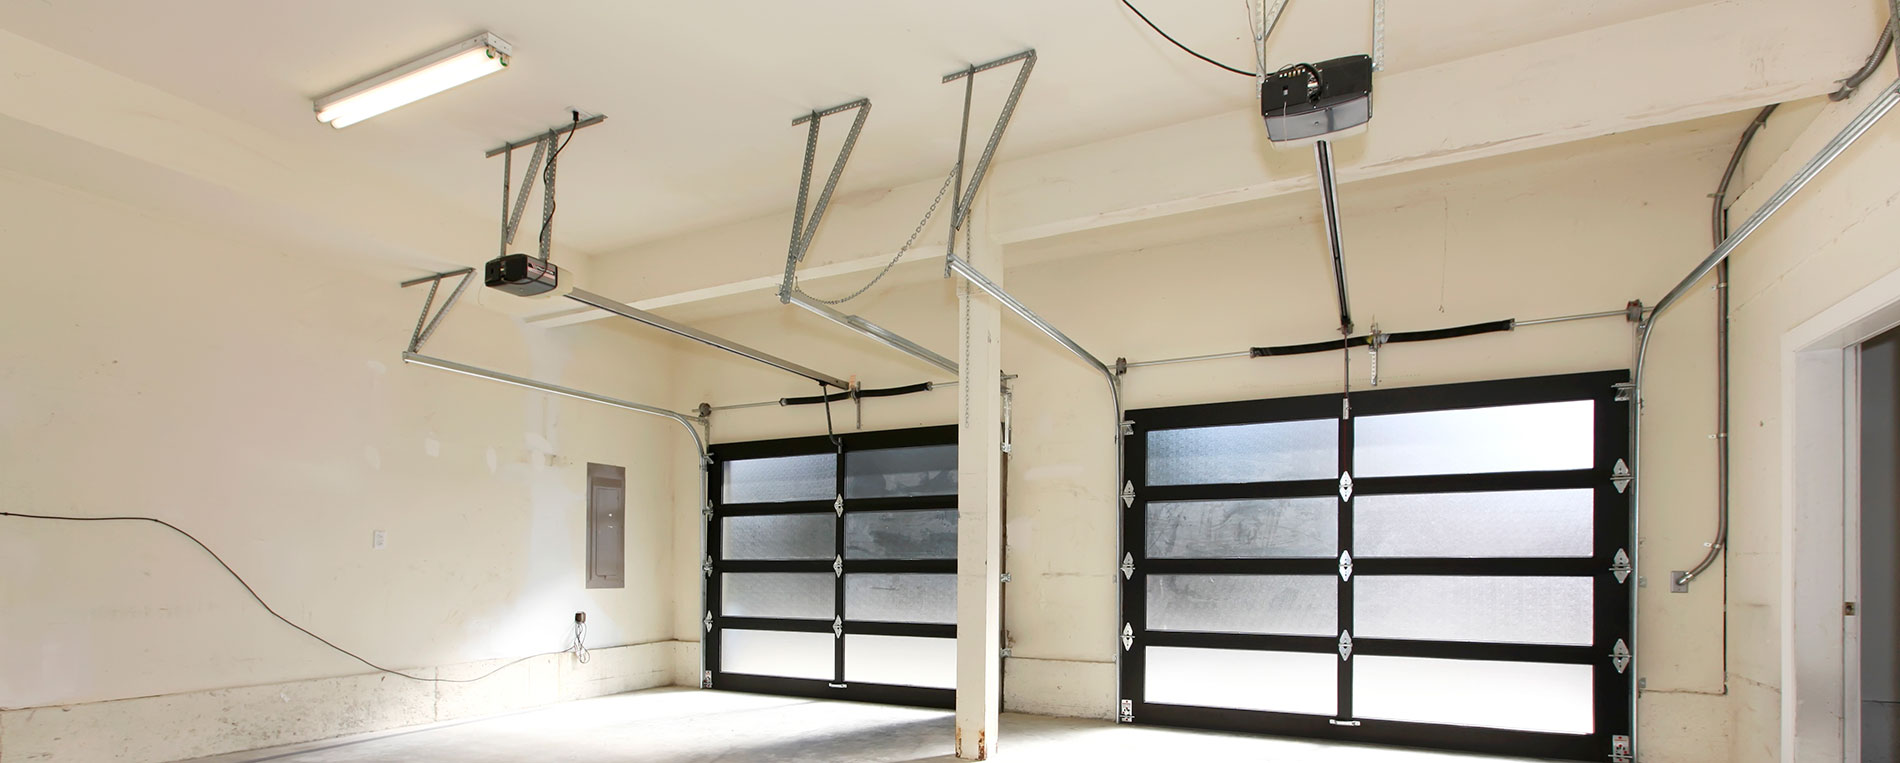 Garage Doors Repair In Aliso Viejo